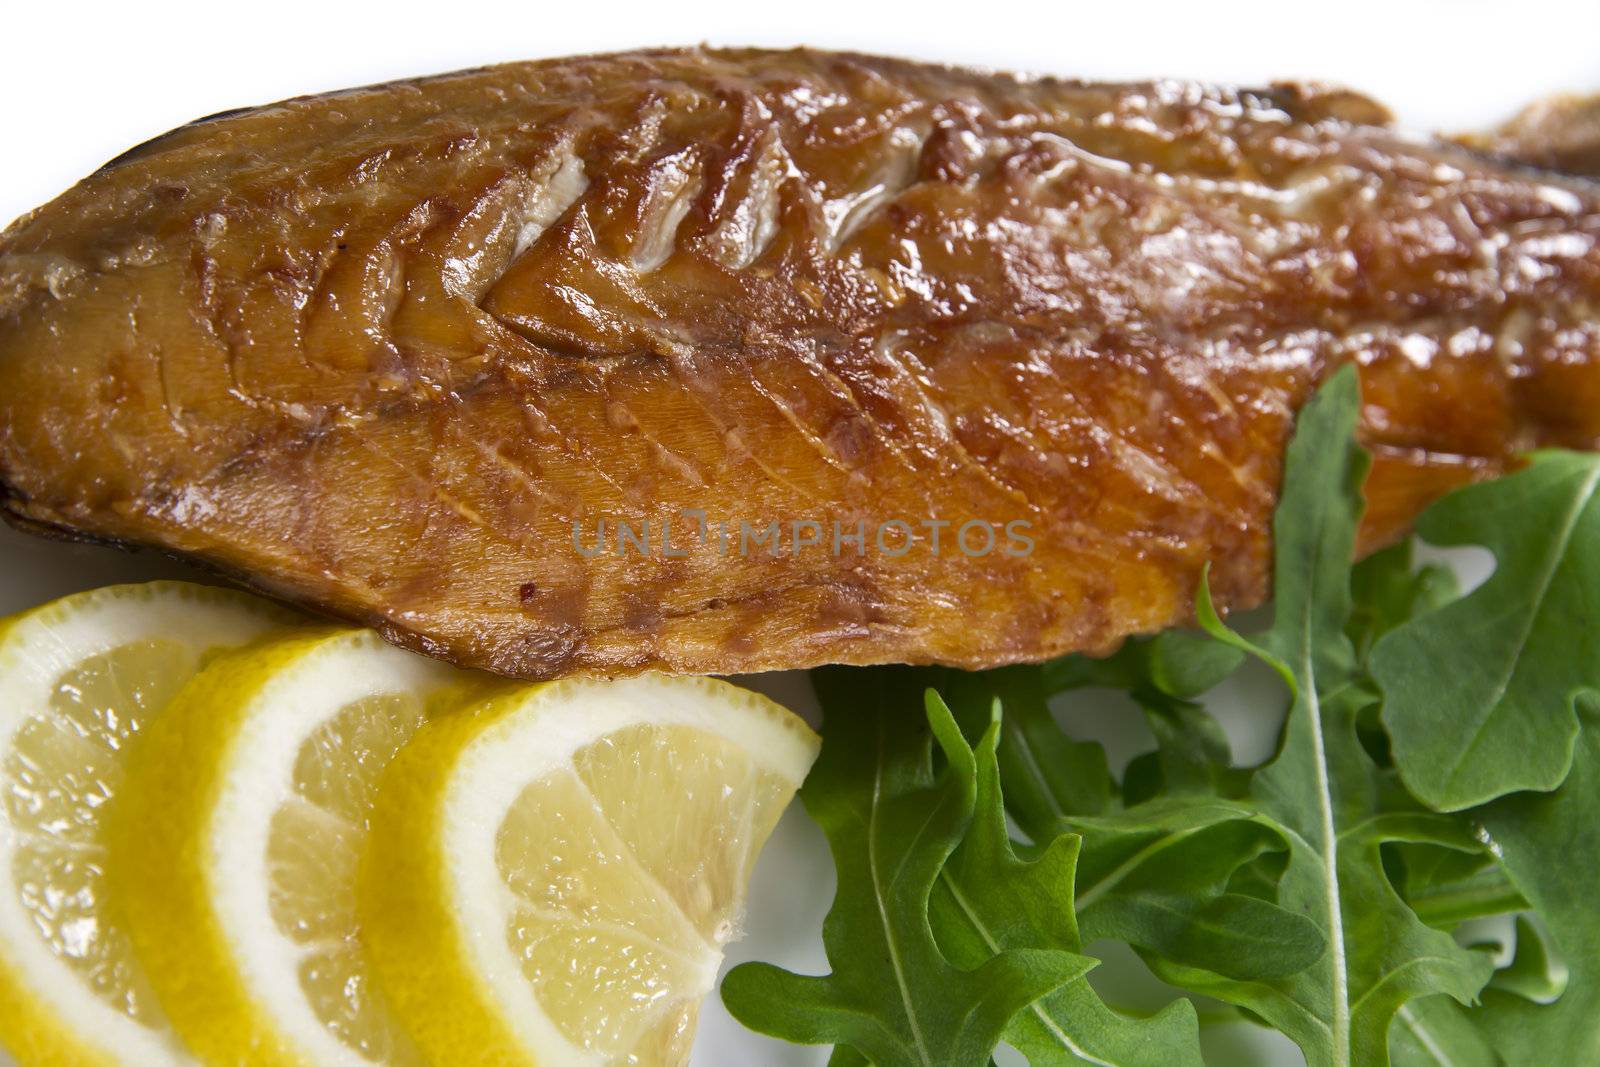 Smoked mackerel fish with lemon and salad